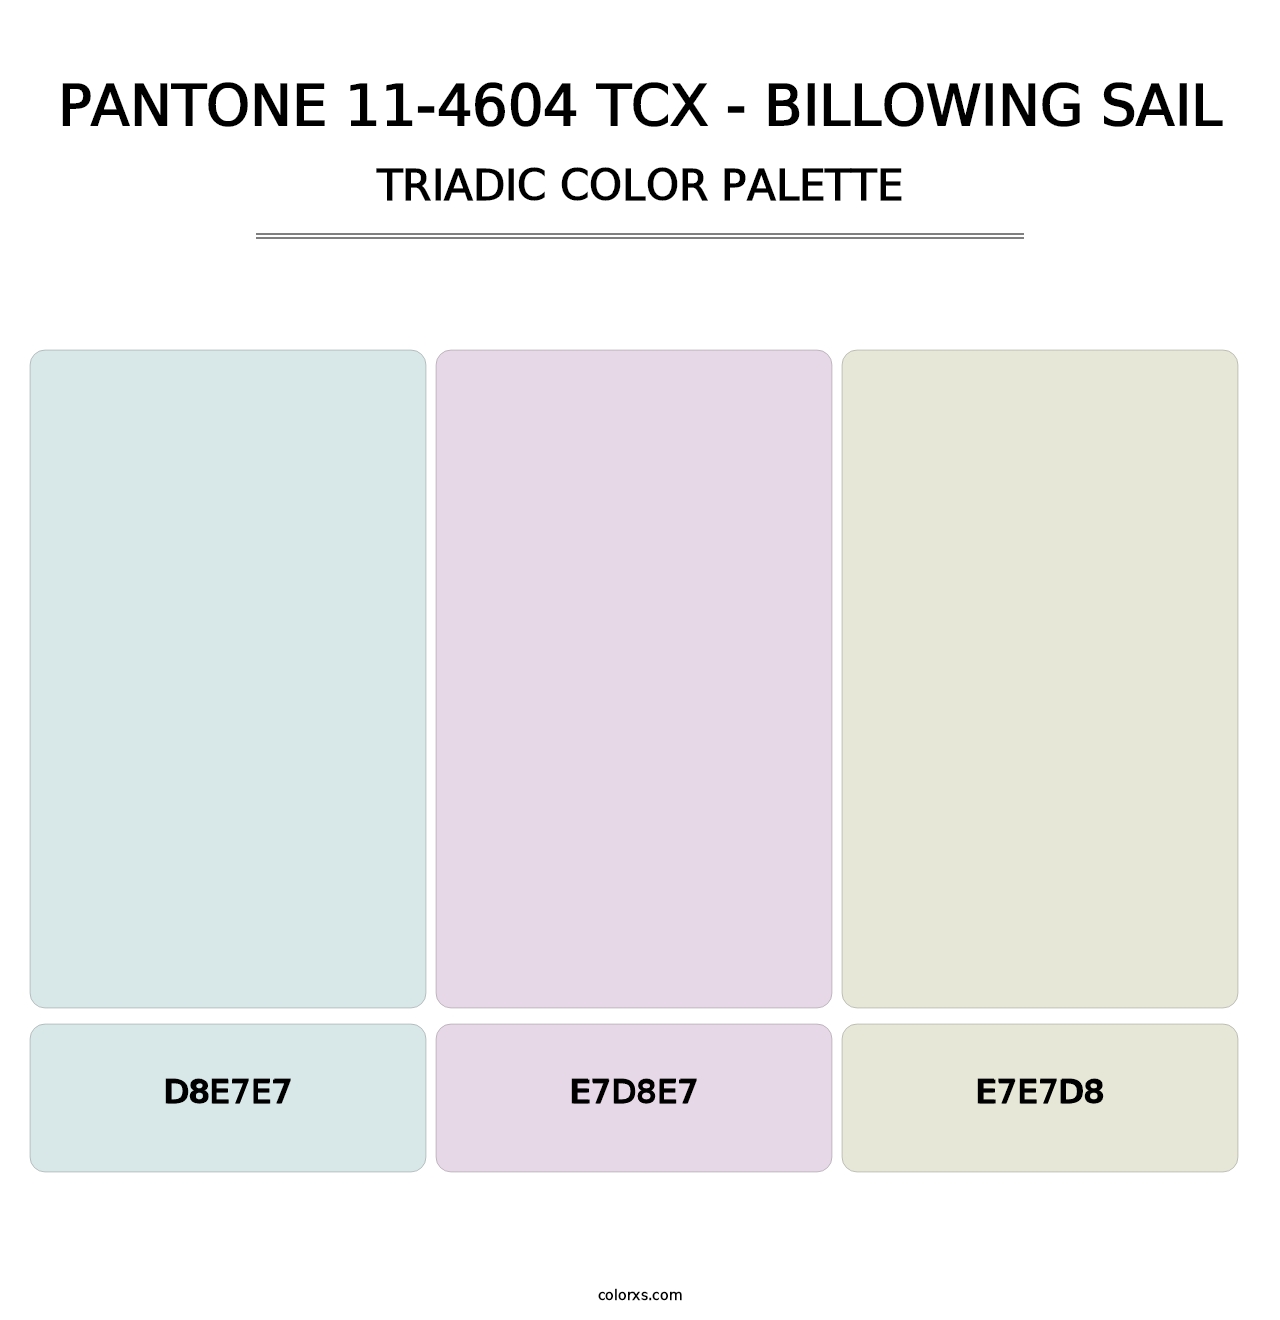 PANTONE 11-4604 TCX - Billowing Sail - Triadic Color Palette